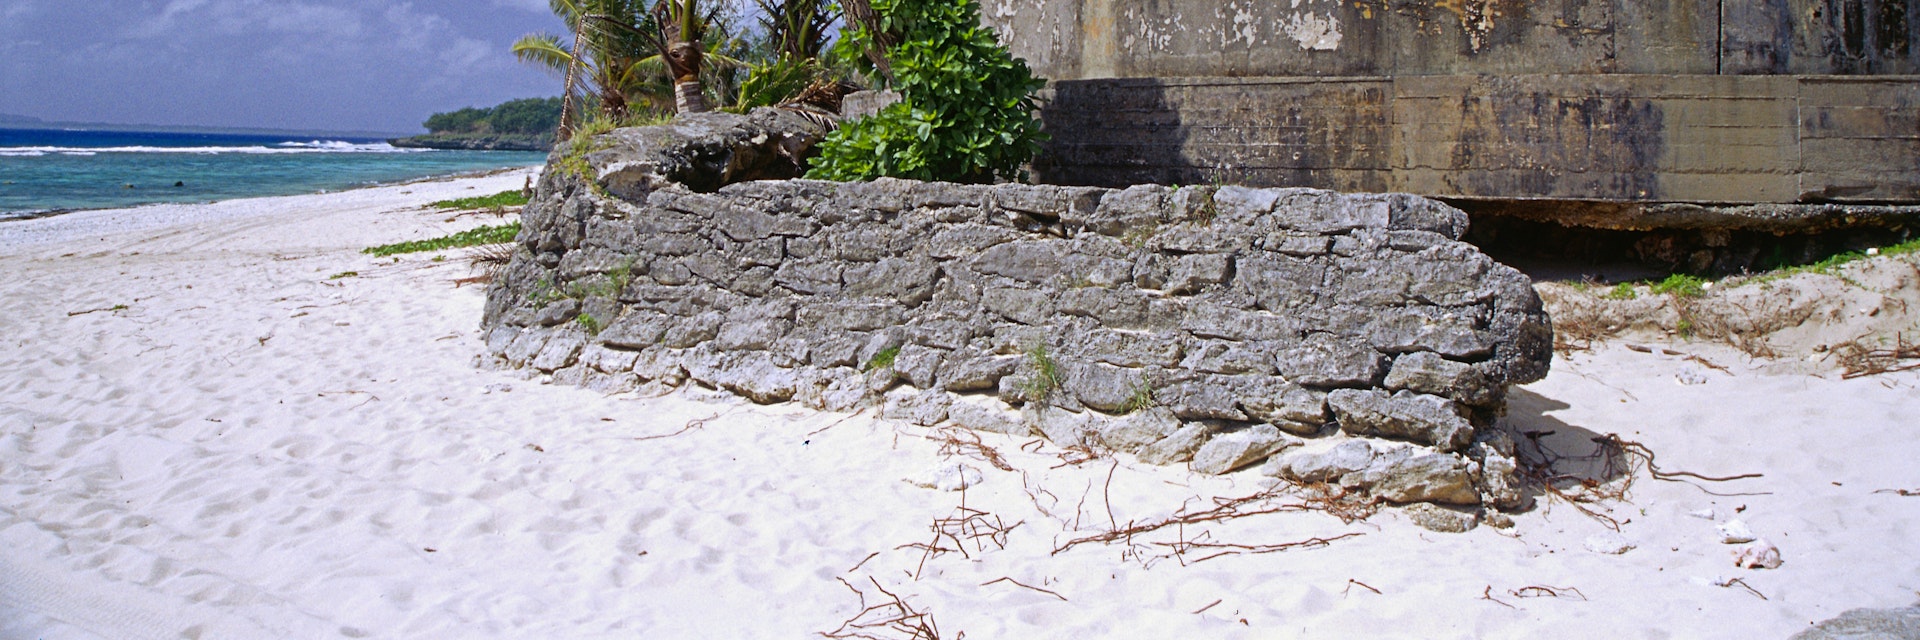 Obyan beach with WWII bunker, Saipan, Mariana Islands